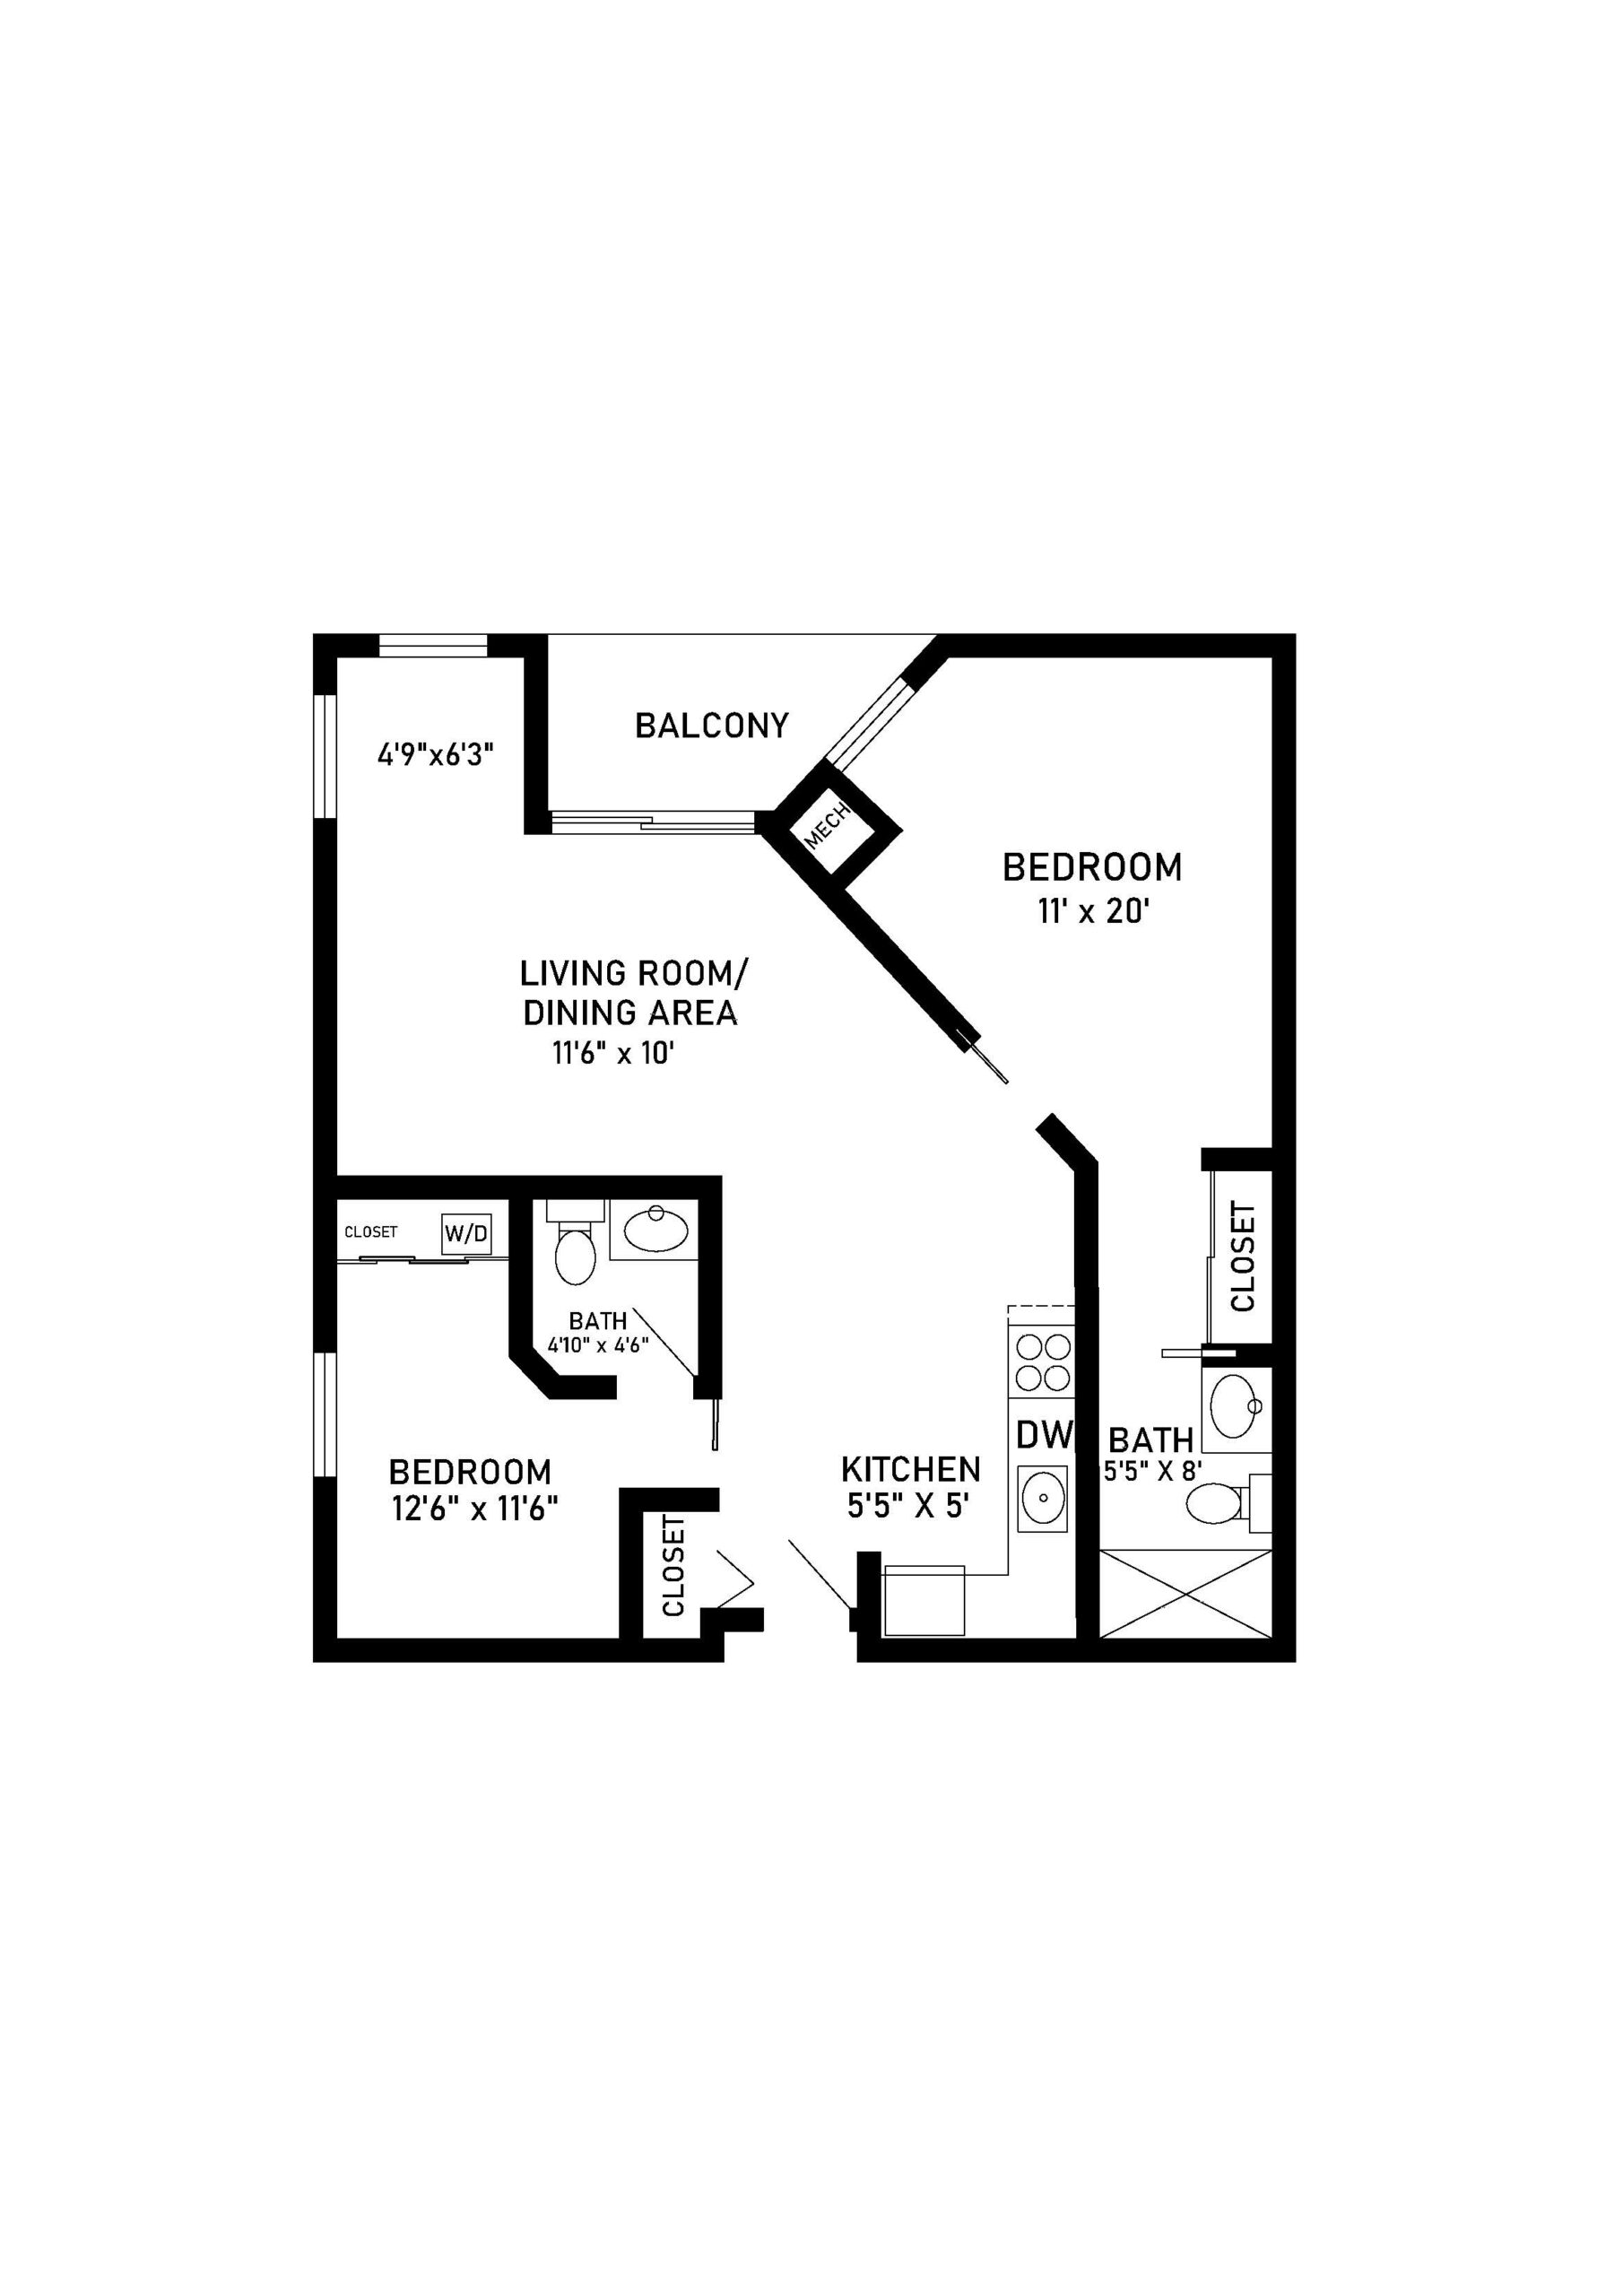 Cedar 2 bed 1 bath apartment floor plan